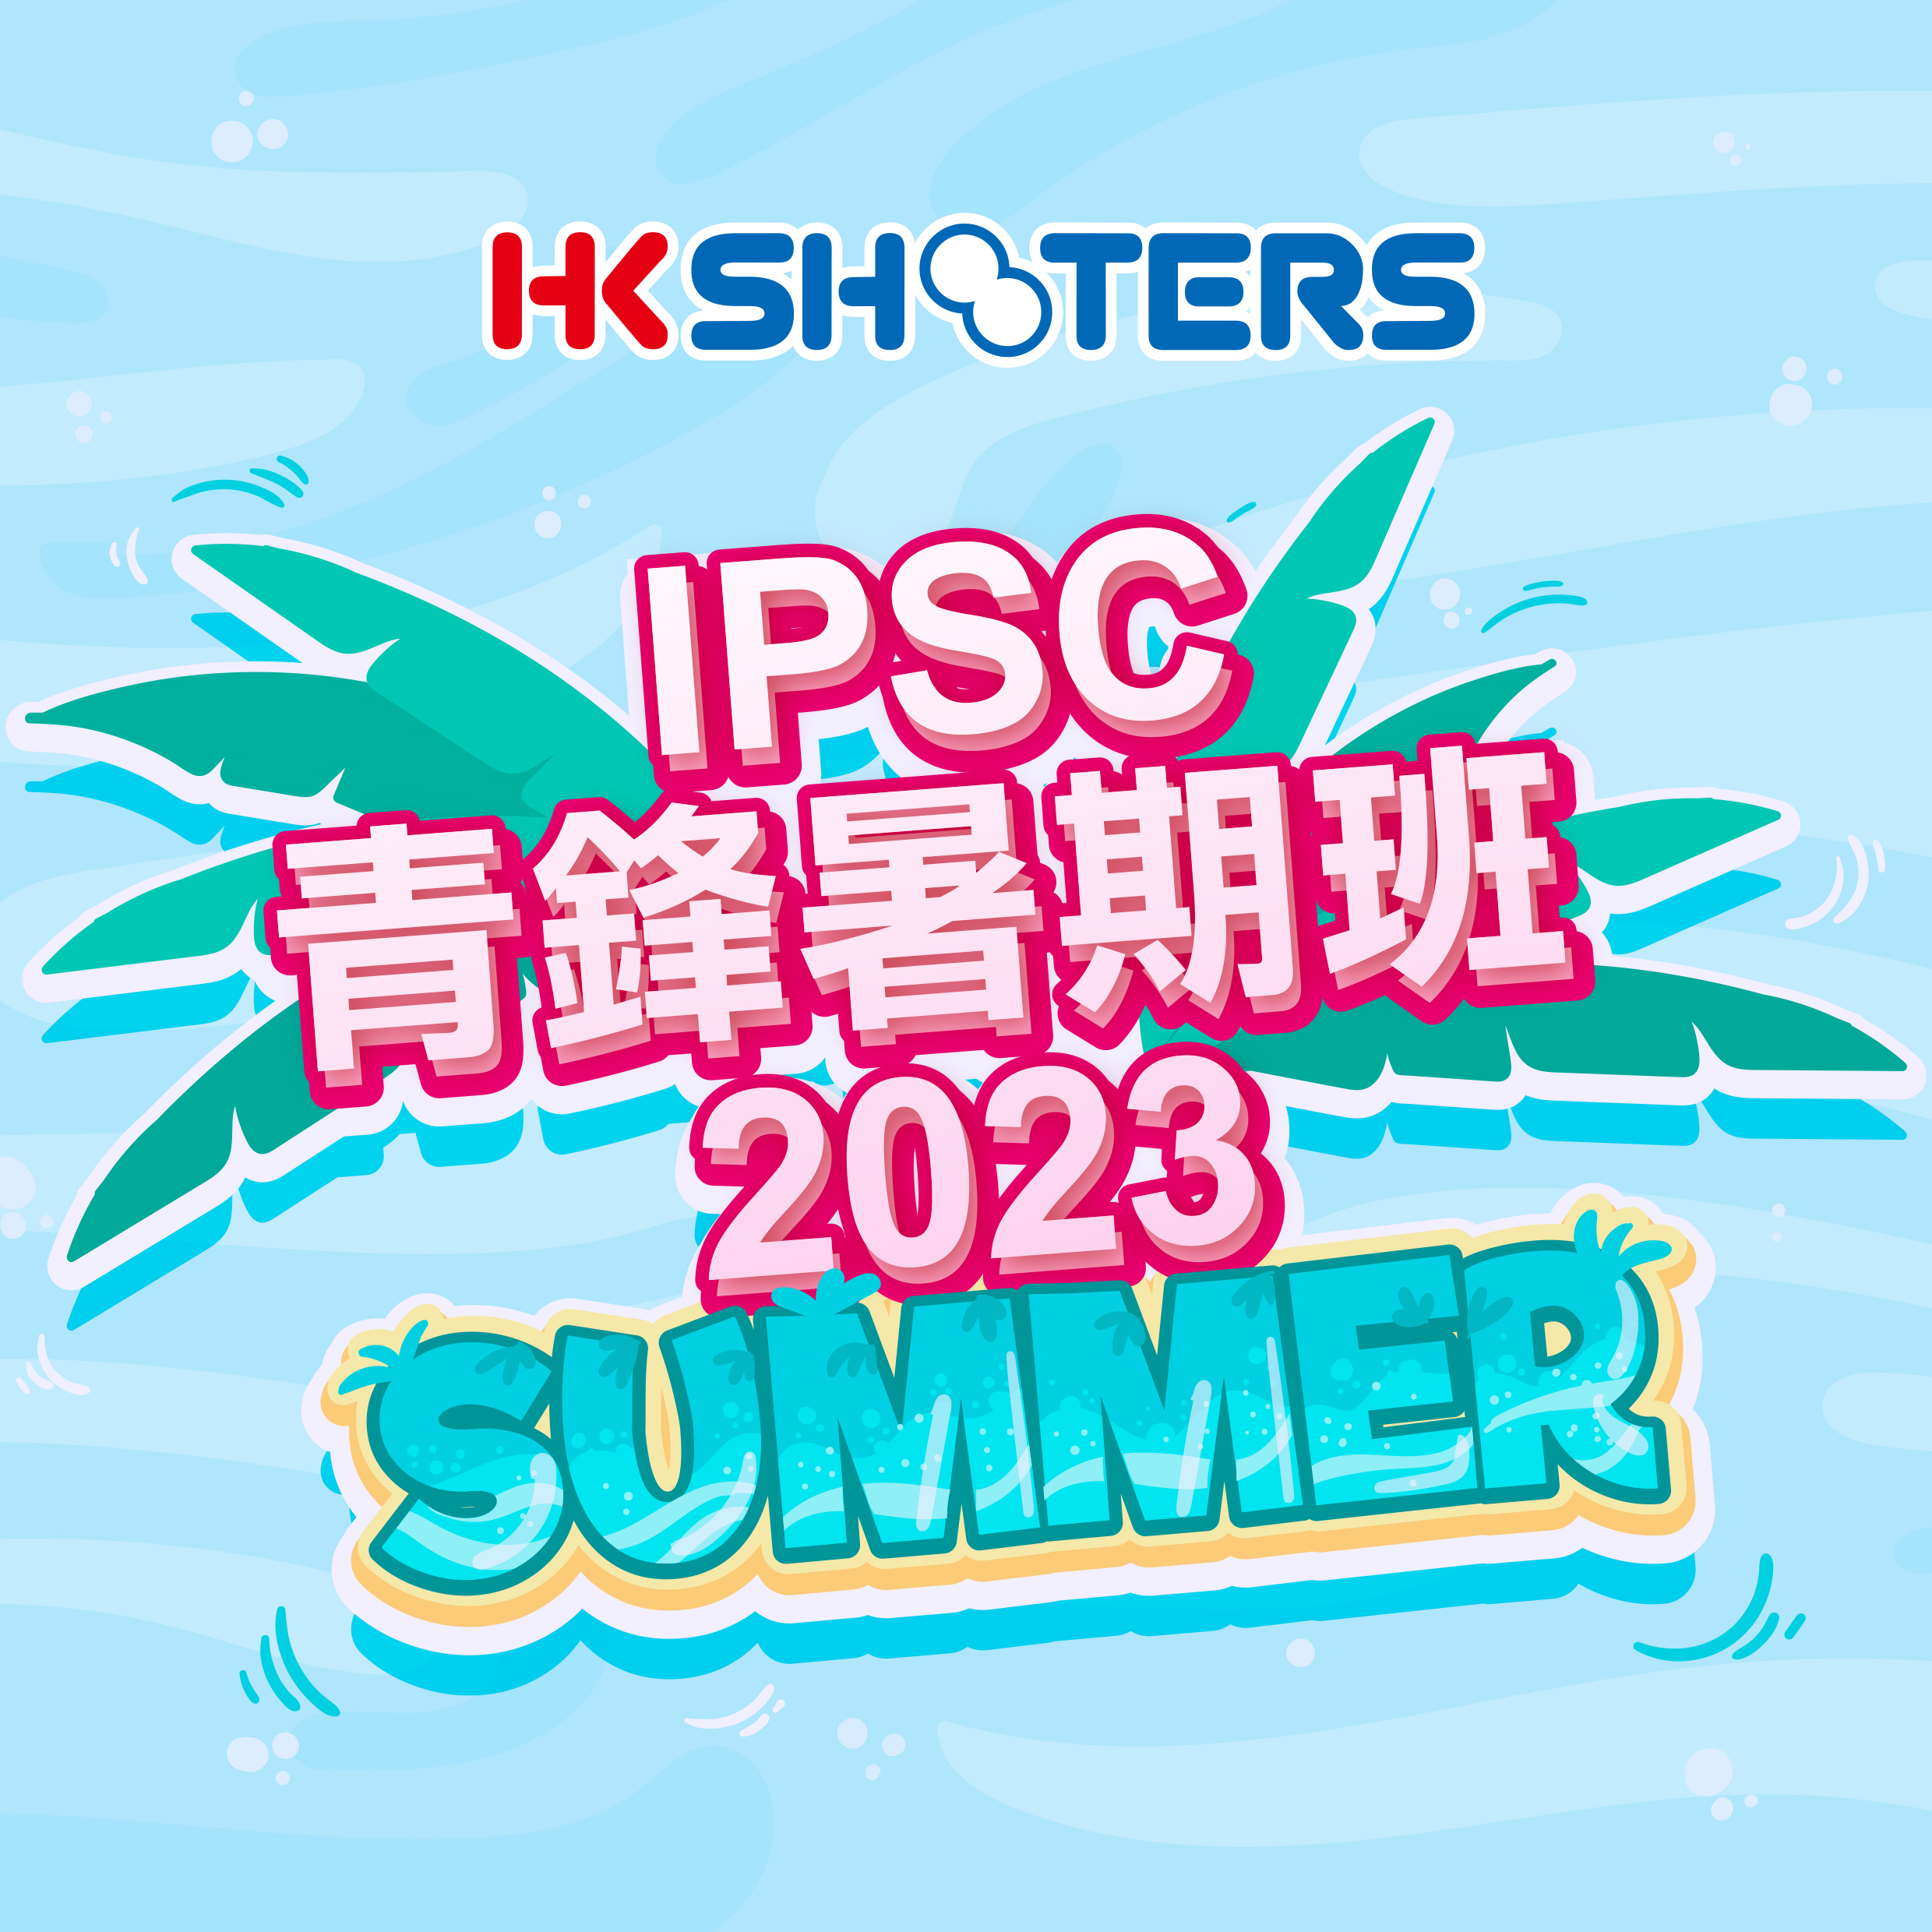 HKSHOOTERS 青鋒IPSC暑期班 2023